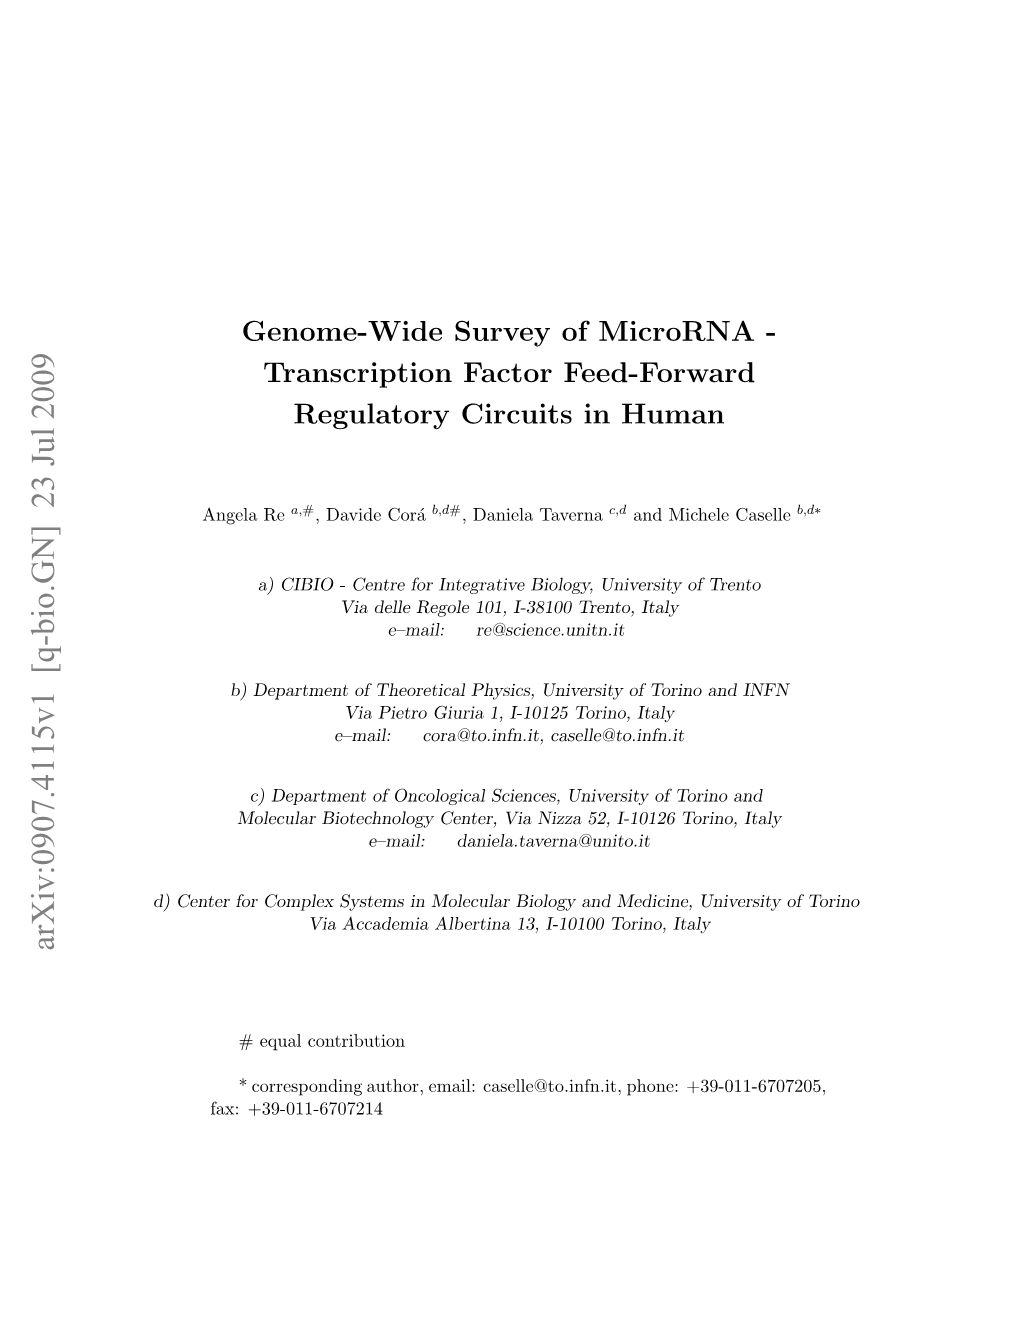 Genome-Wide Survey of Microrna-Transcription Factor